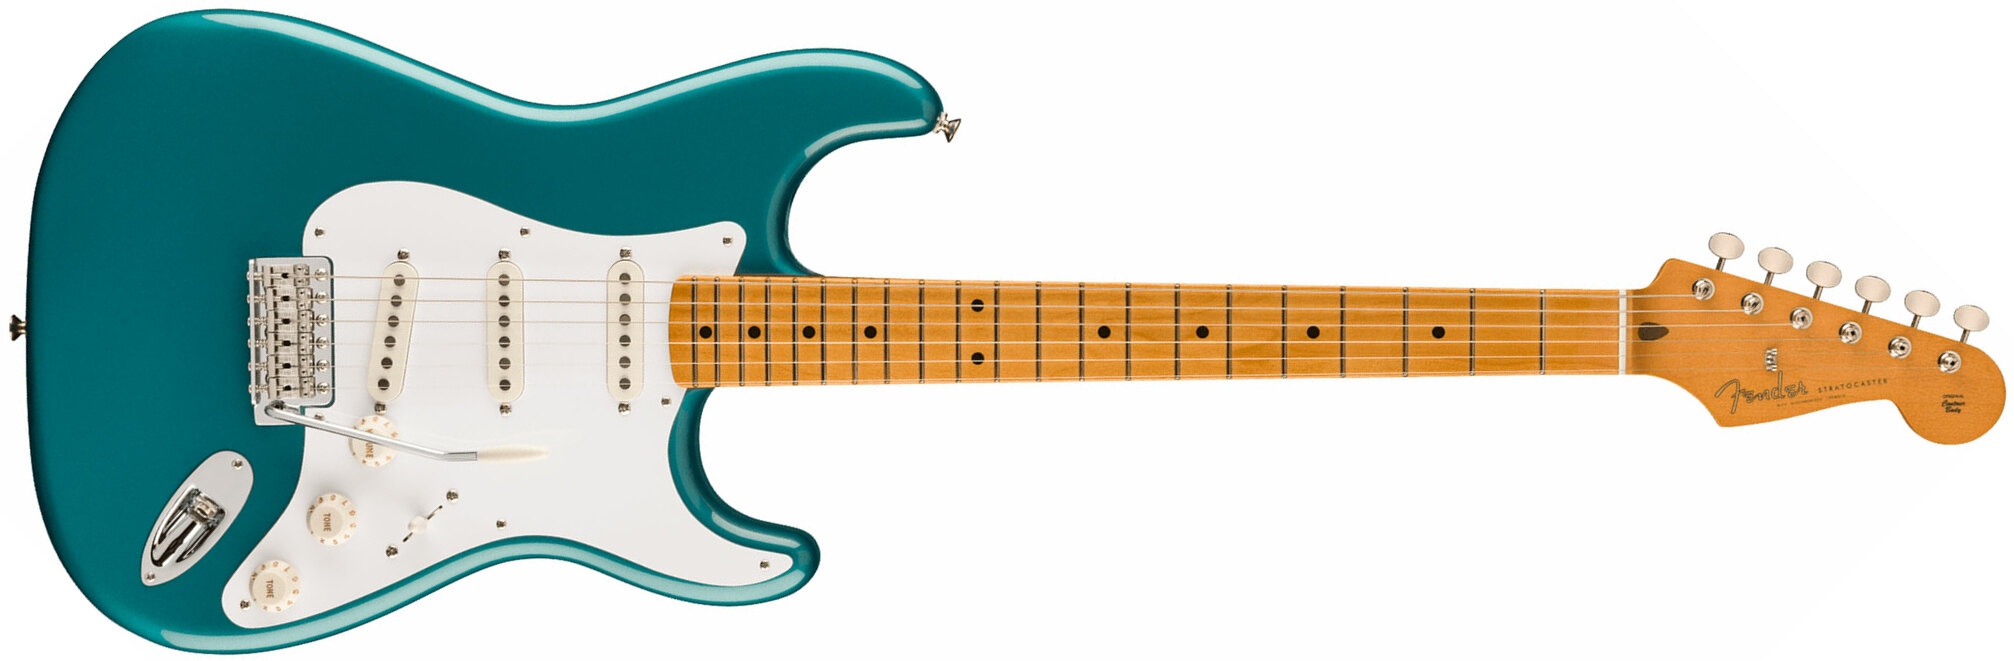 Fender Strat 50s Vintera 2 Mex 3s Trem Mn - Ocean Turquoise - E-Gitarre in Str-Form - Main picture